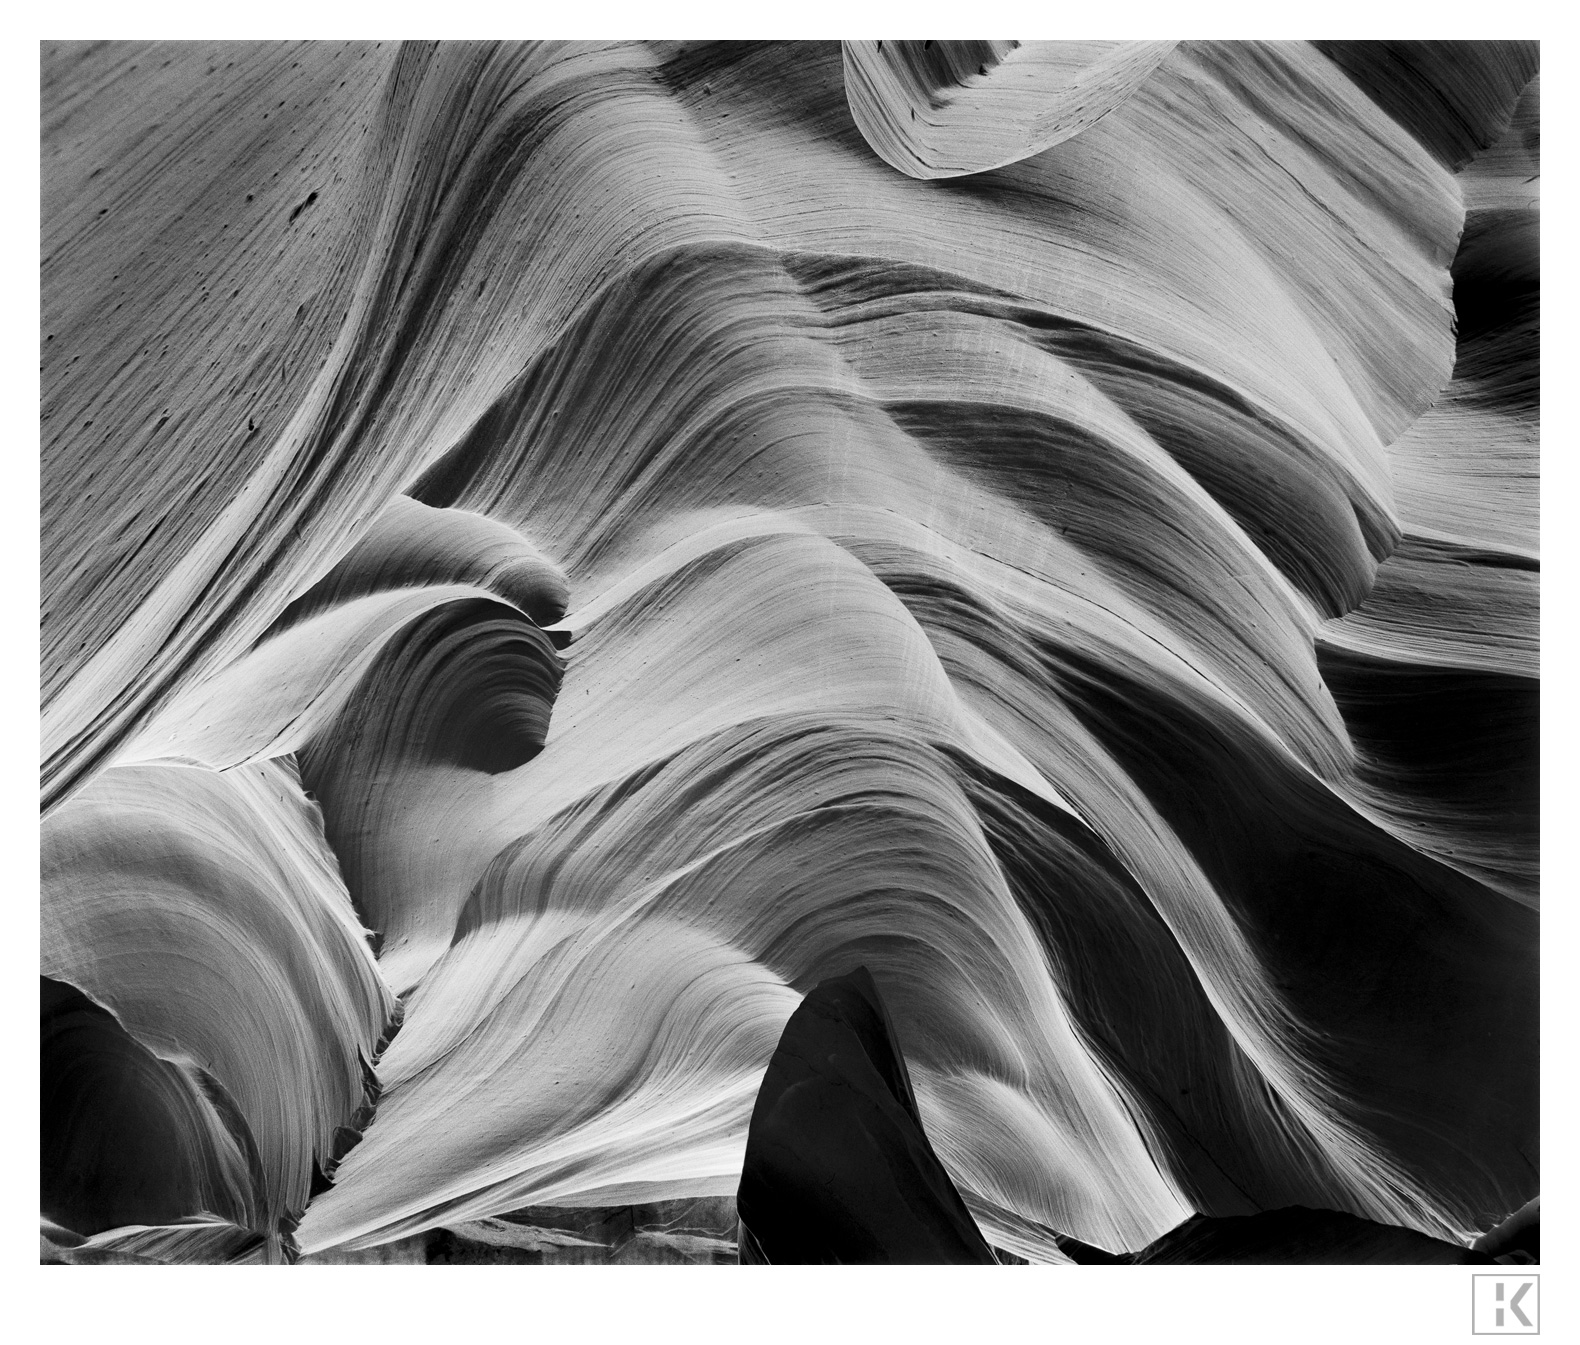 Waves of Rock, Lower Antelope Canyon